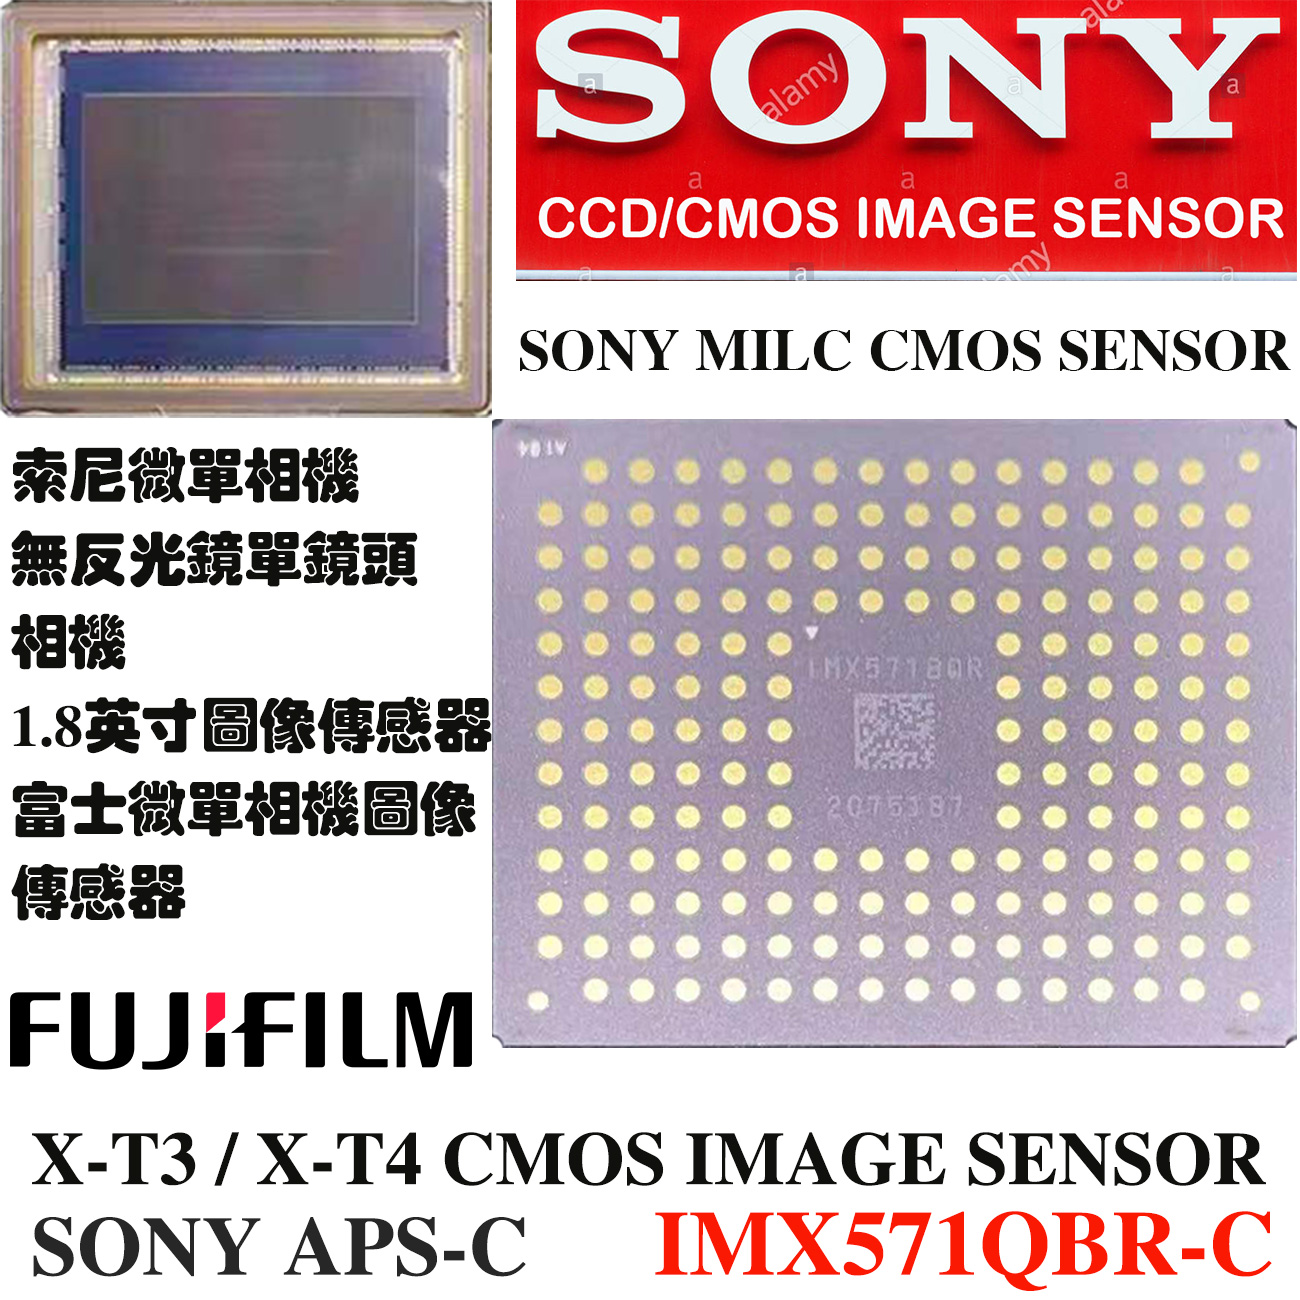 SONY IMX571BQR-C，26.11MP IMAGE SENSOR,富士微单相机X-T3 / X-T4图像传感器，1.8英寸图像传感器，1.8-inch cmos sensor,Diagonal 28.3MM image SENSOR,FUJIFILM X-T3 / X-T4 CMOS IMAGE SENSOR,SONY APS-C CMOS sensor 1.8-inch,SONY Industial grade sensor,Digital Single Lens Reflex Camera image sensor，micro-single-camera sensor，Interchangeable Lens Digital Camera RGB cmos sensor,Mirrorless Interchangeable-lens Camera(MILC) sensor,Non-Reflex Camera sensor,无反光镜相机、微型单反相机、无反相机图像传感器